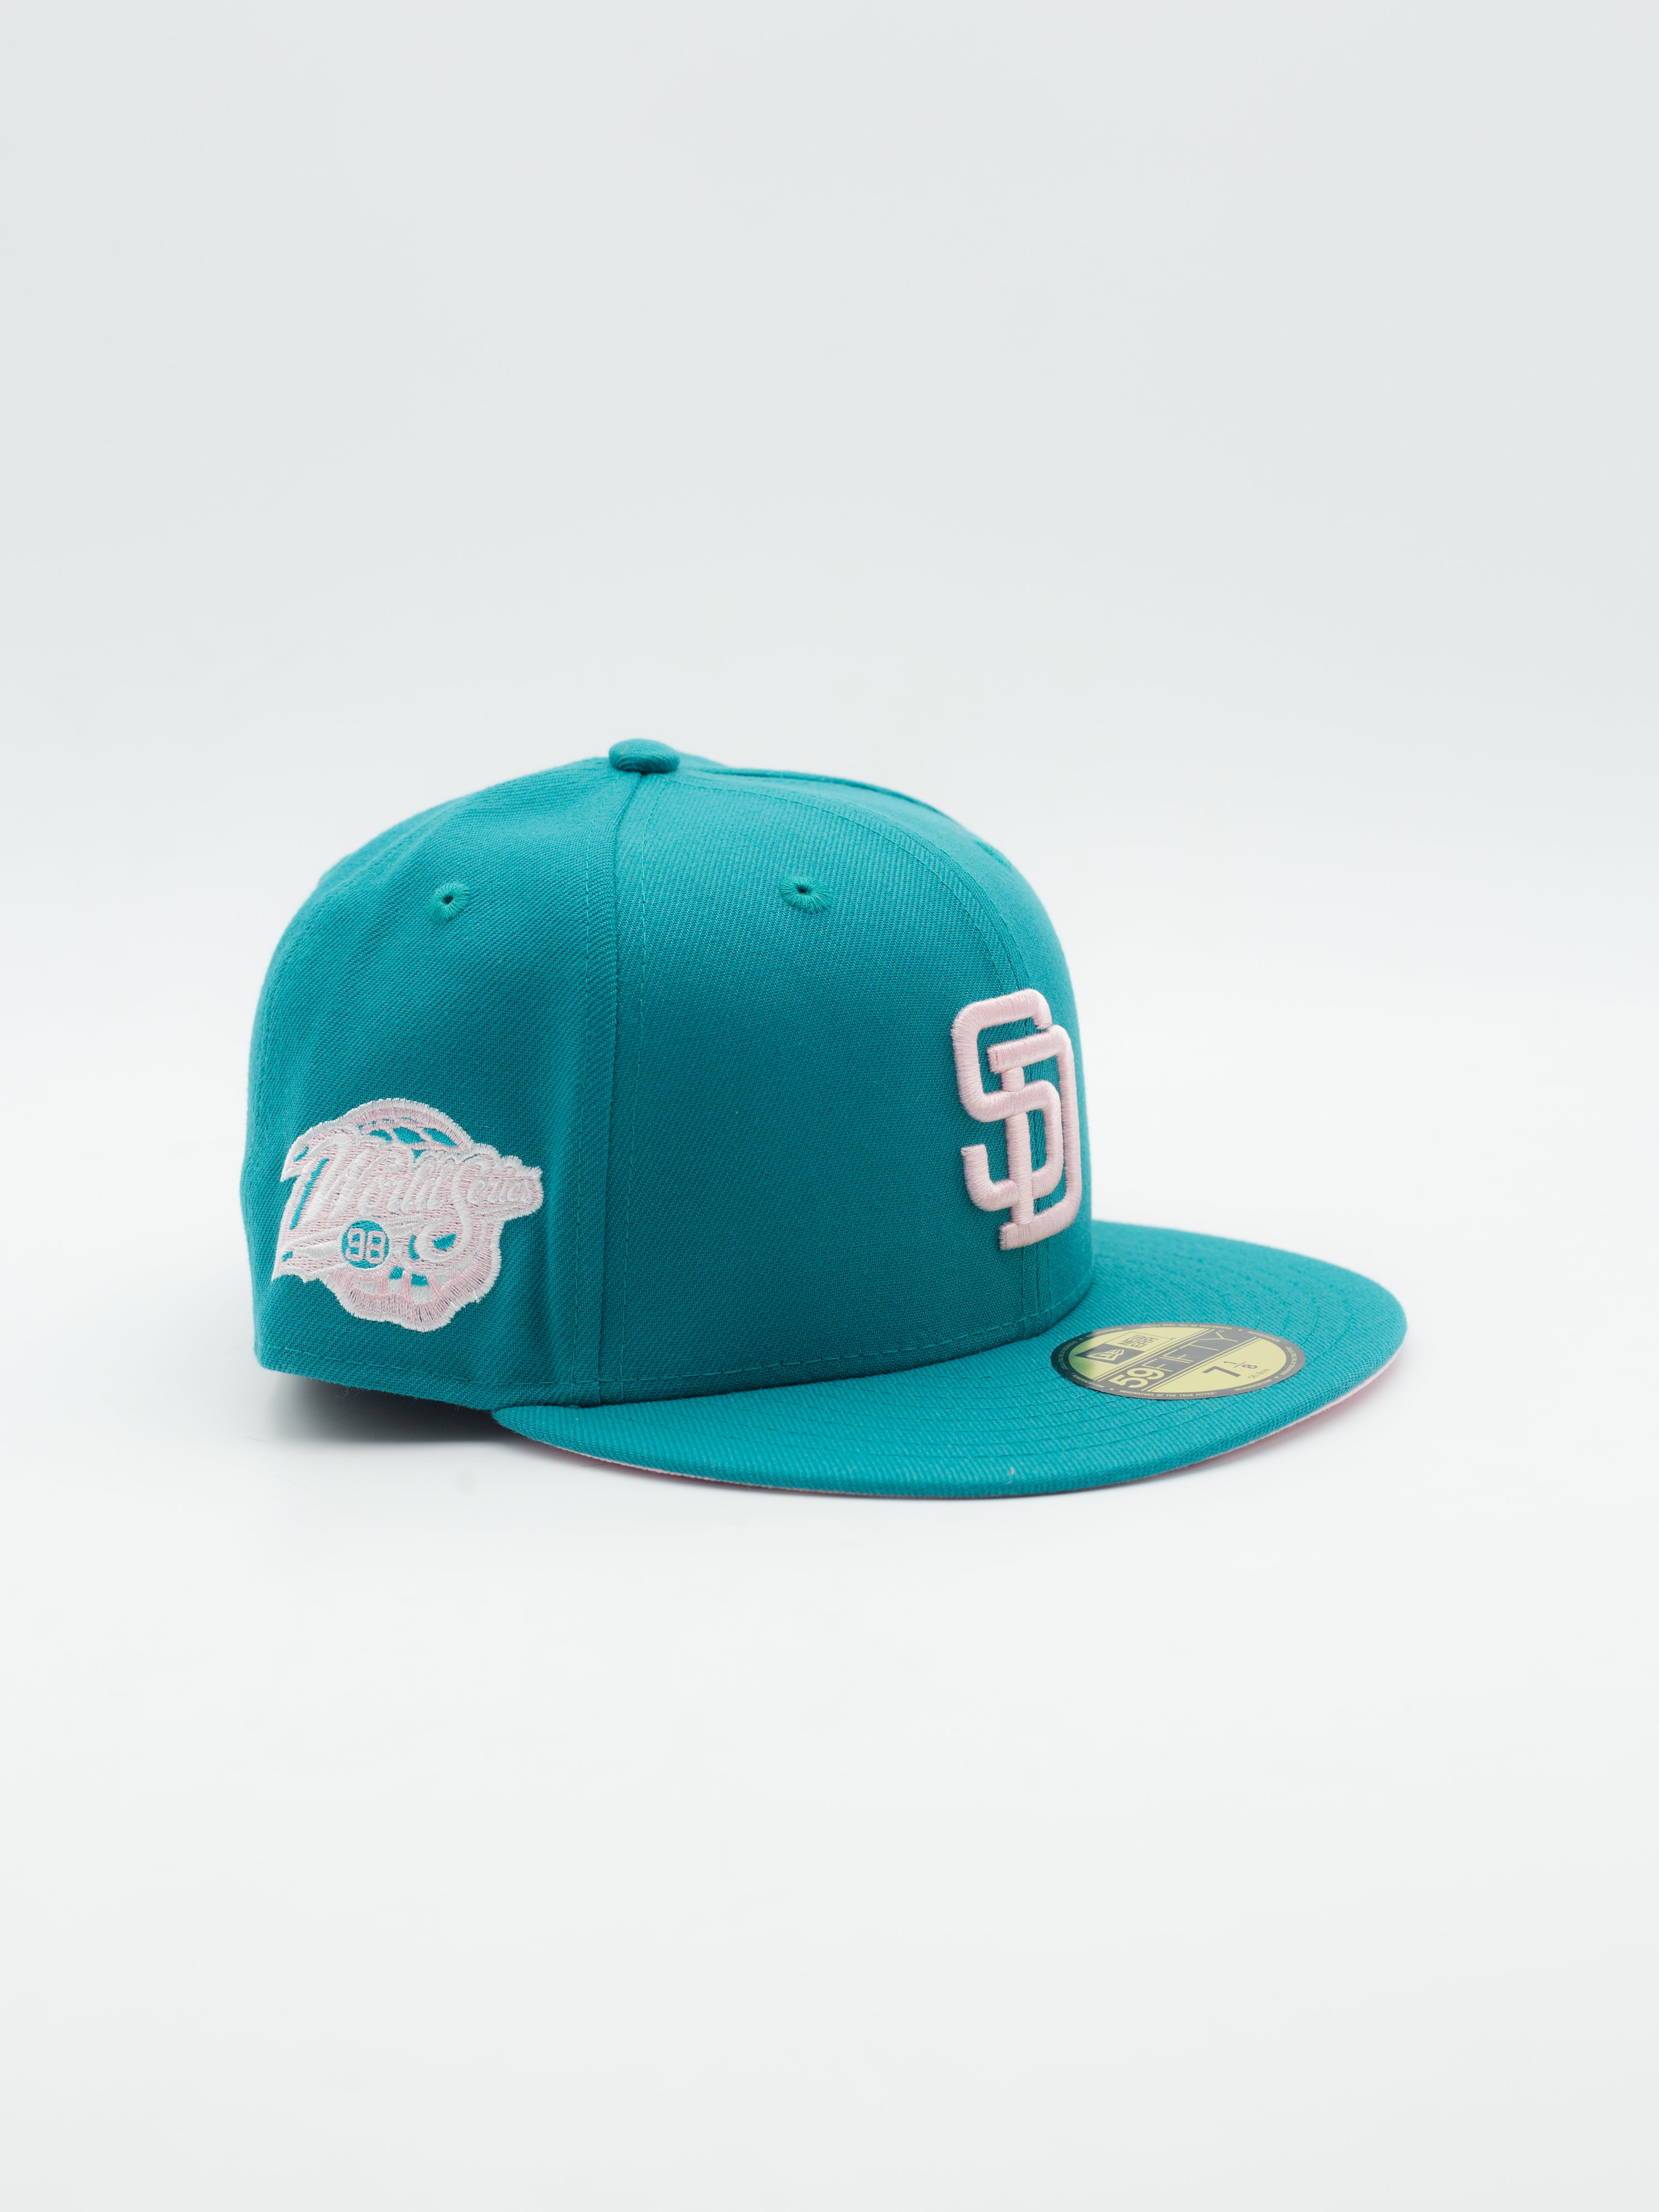 59Fifty San Diego Padres Turquoise Side Patch - La Tienda de las Gorras